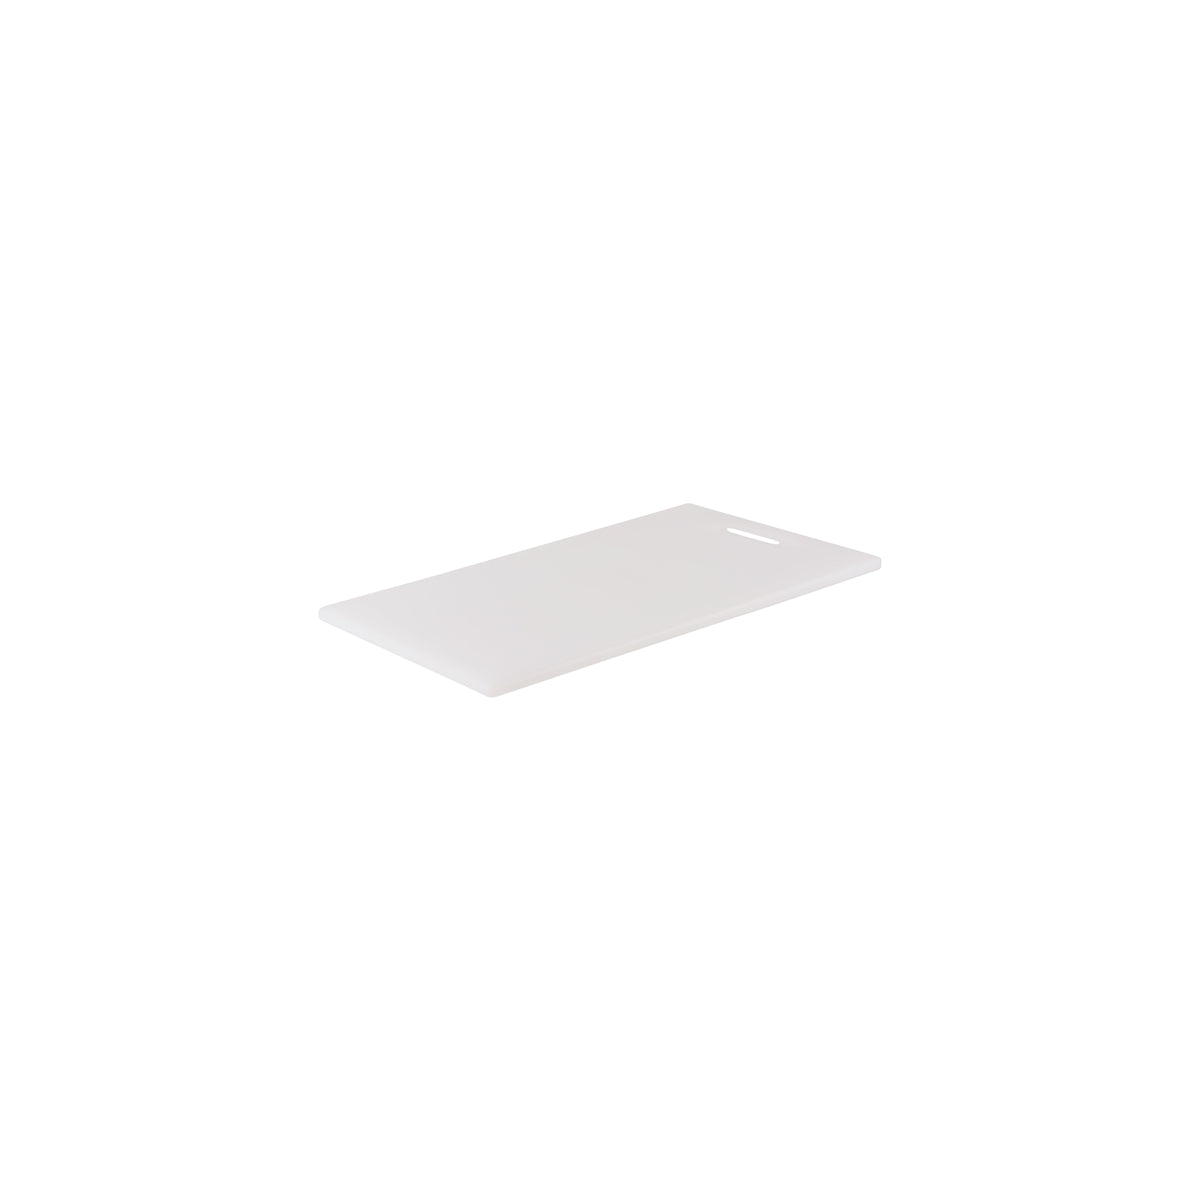 04311 Chef Inox Cutting Board Polyethylene White with Handle 200x270x12mm Tomkin Australia Hospitality Supplies